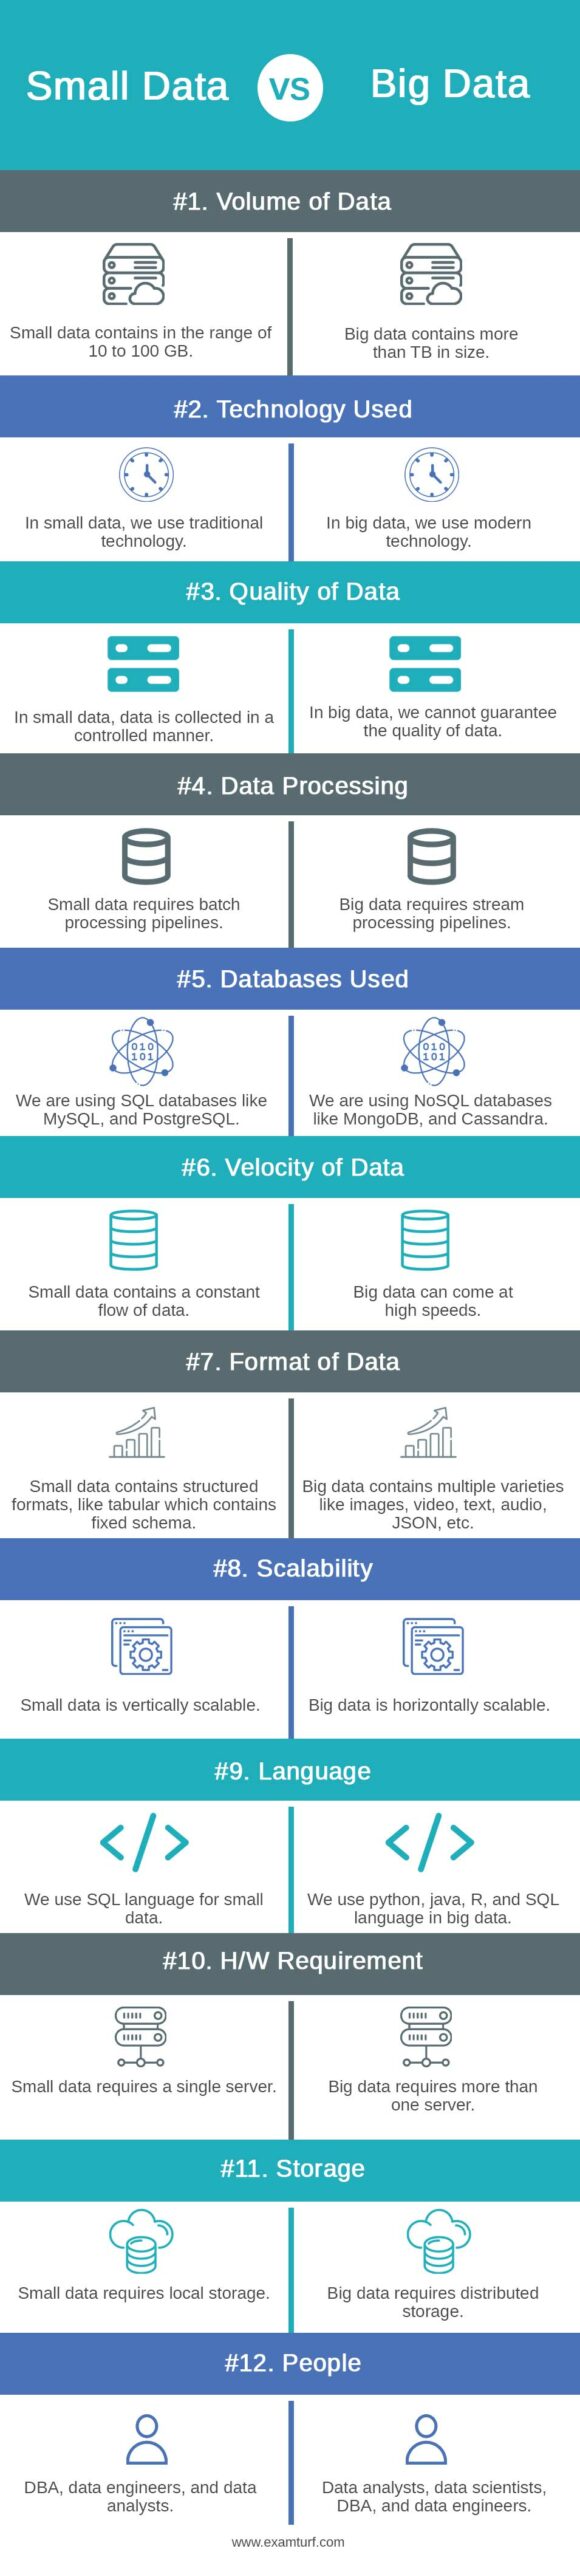 Small-Data-vs-Big-Data-info